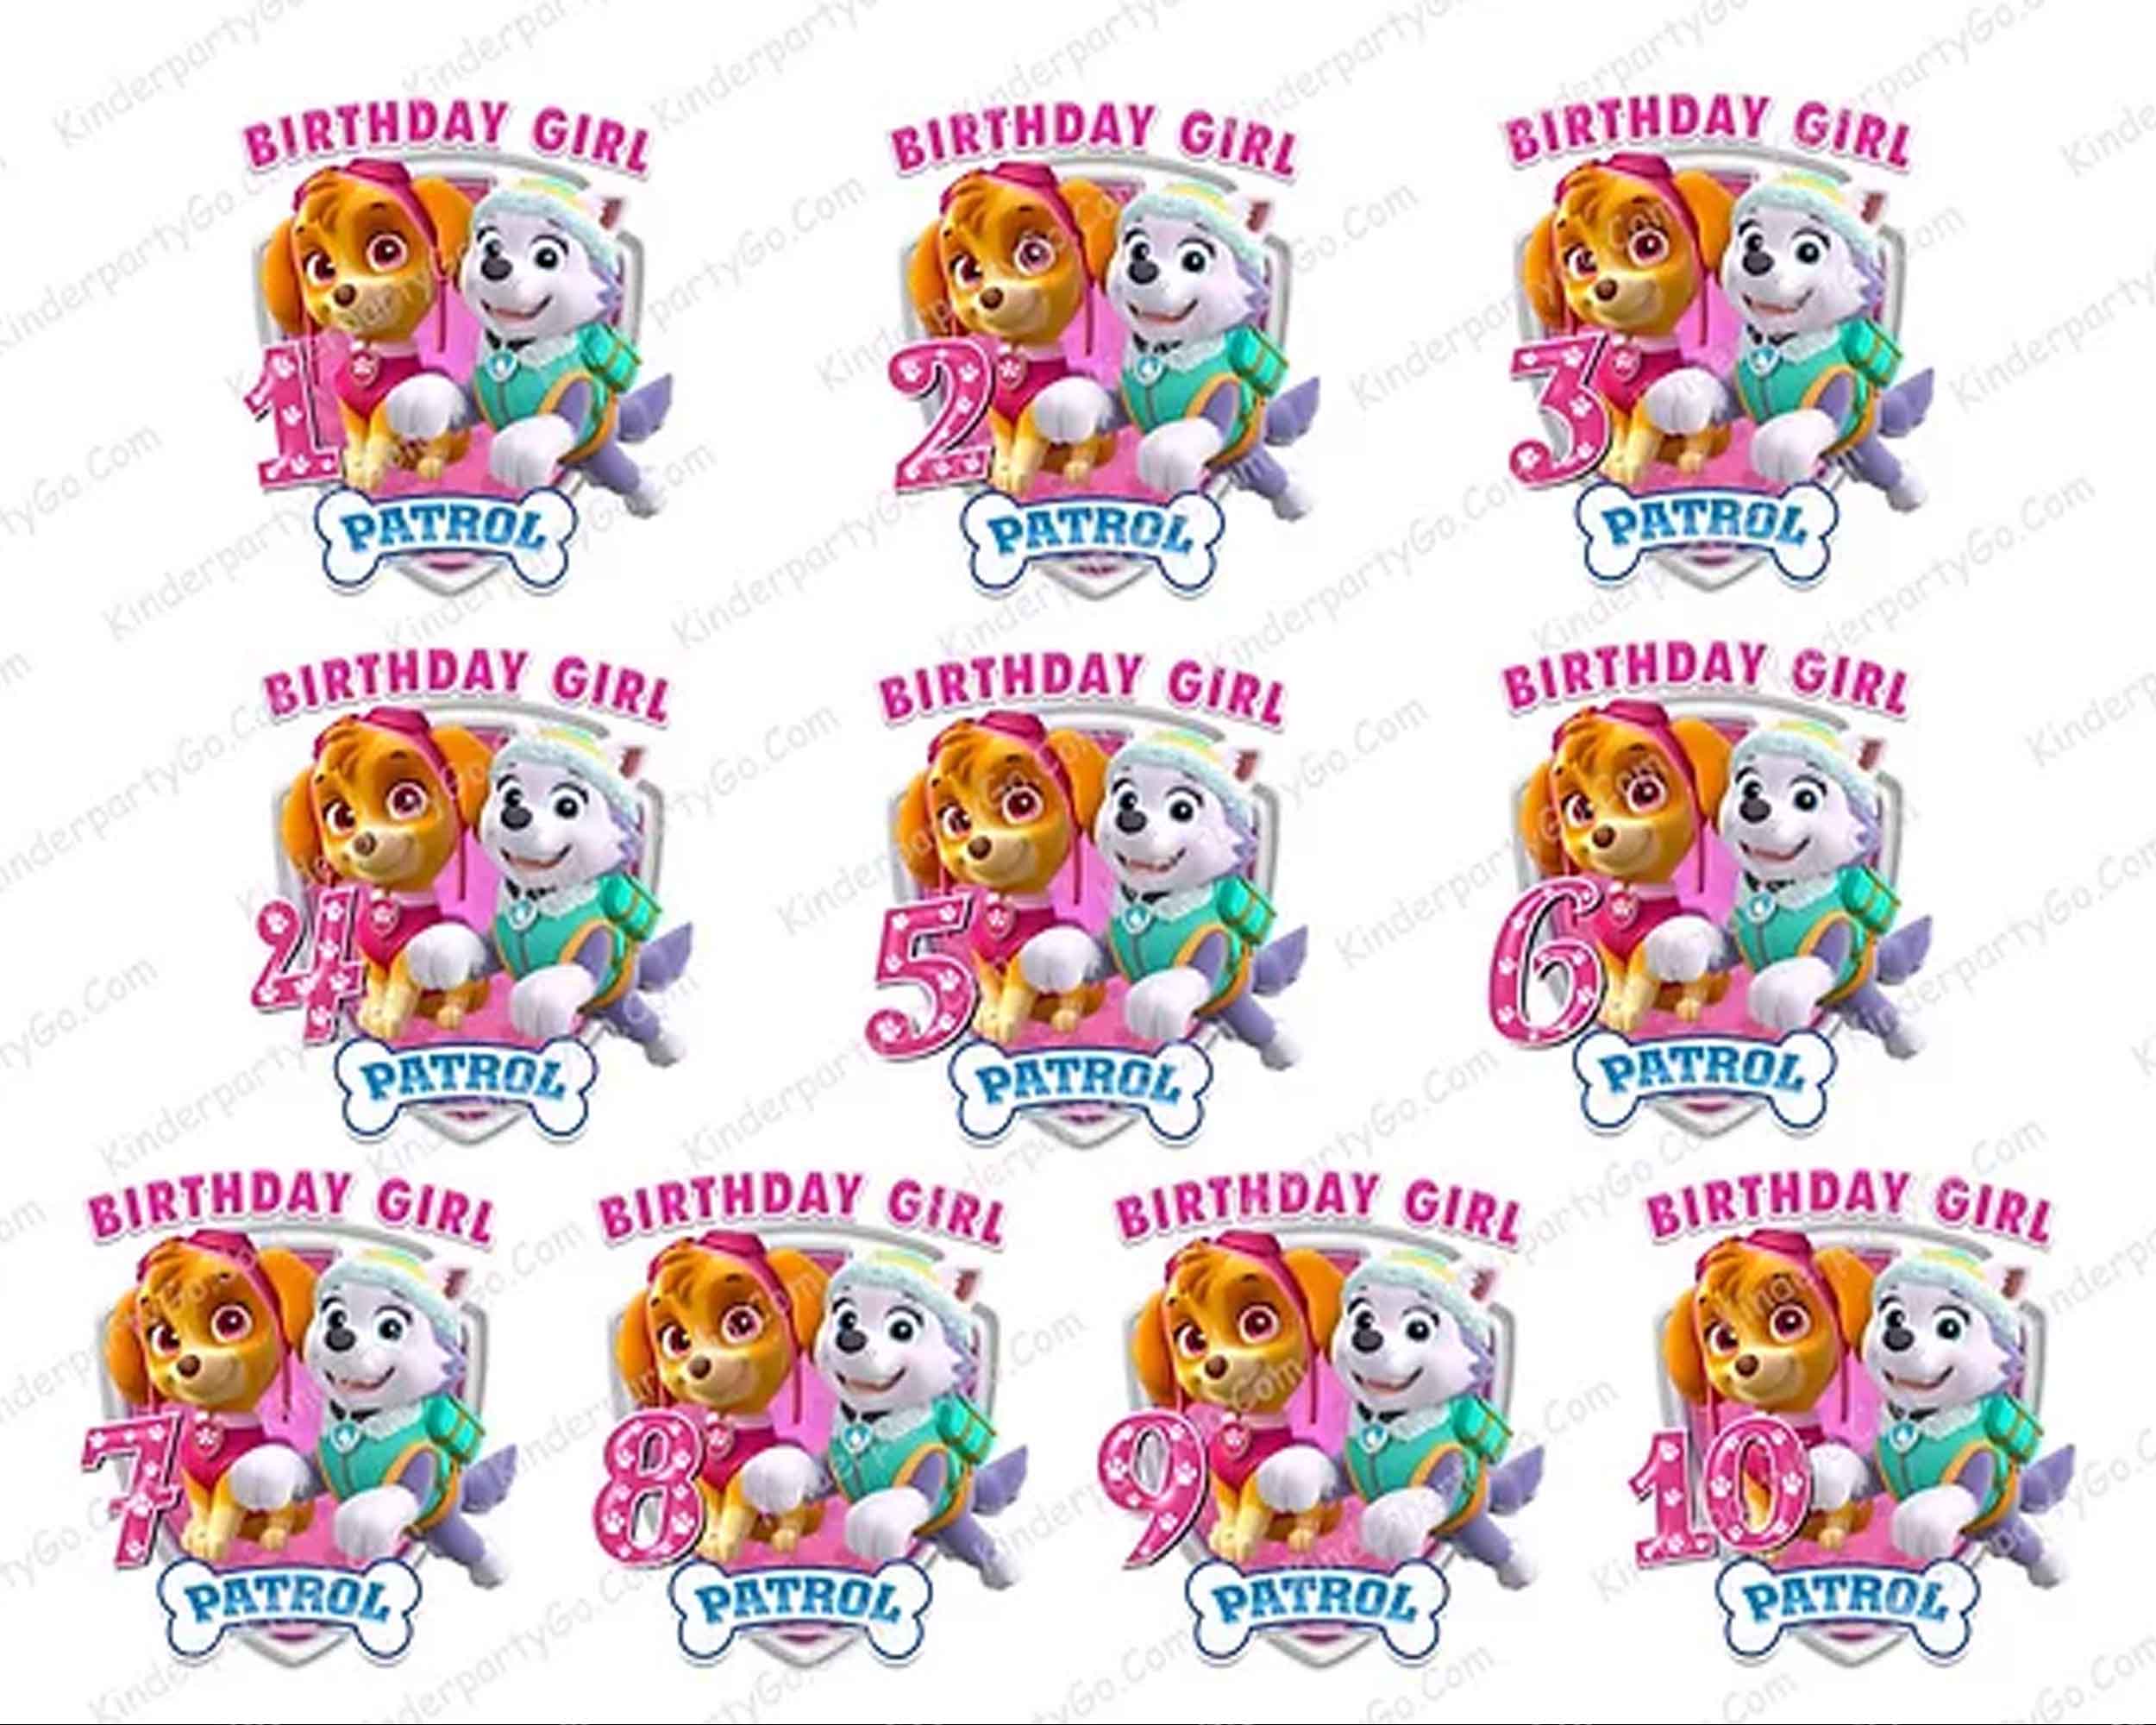 35 Paw Patrol PNG Bundle, Birthday girl png, Bundle designs, digital download.